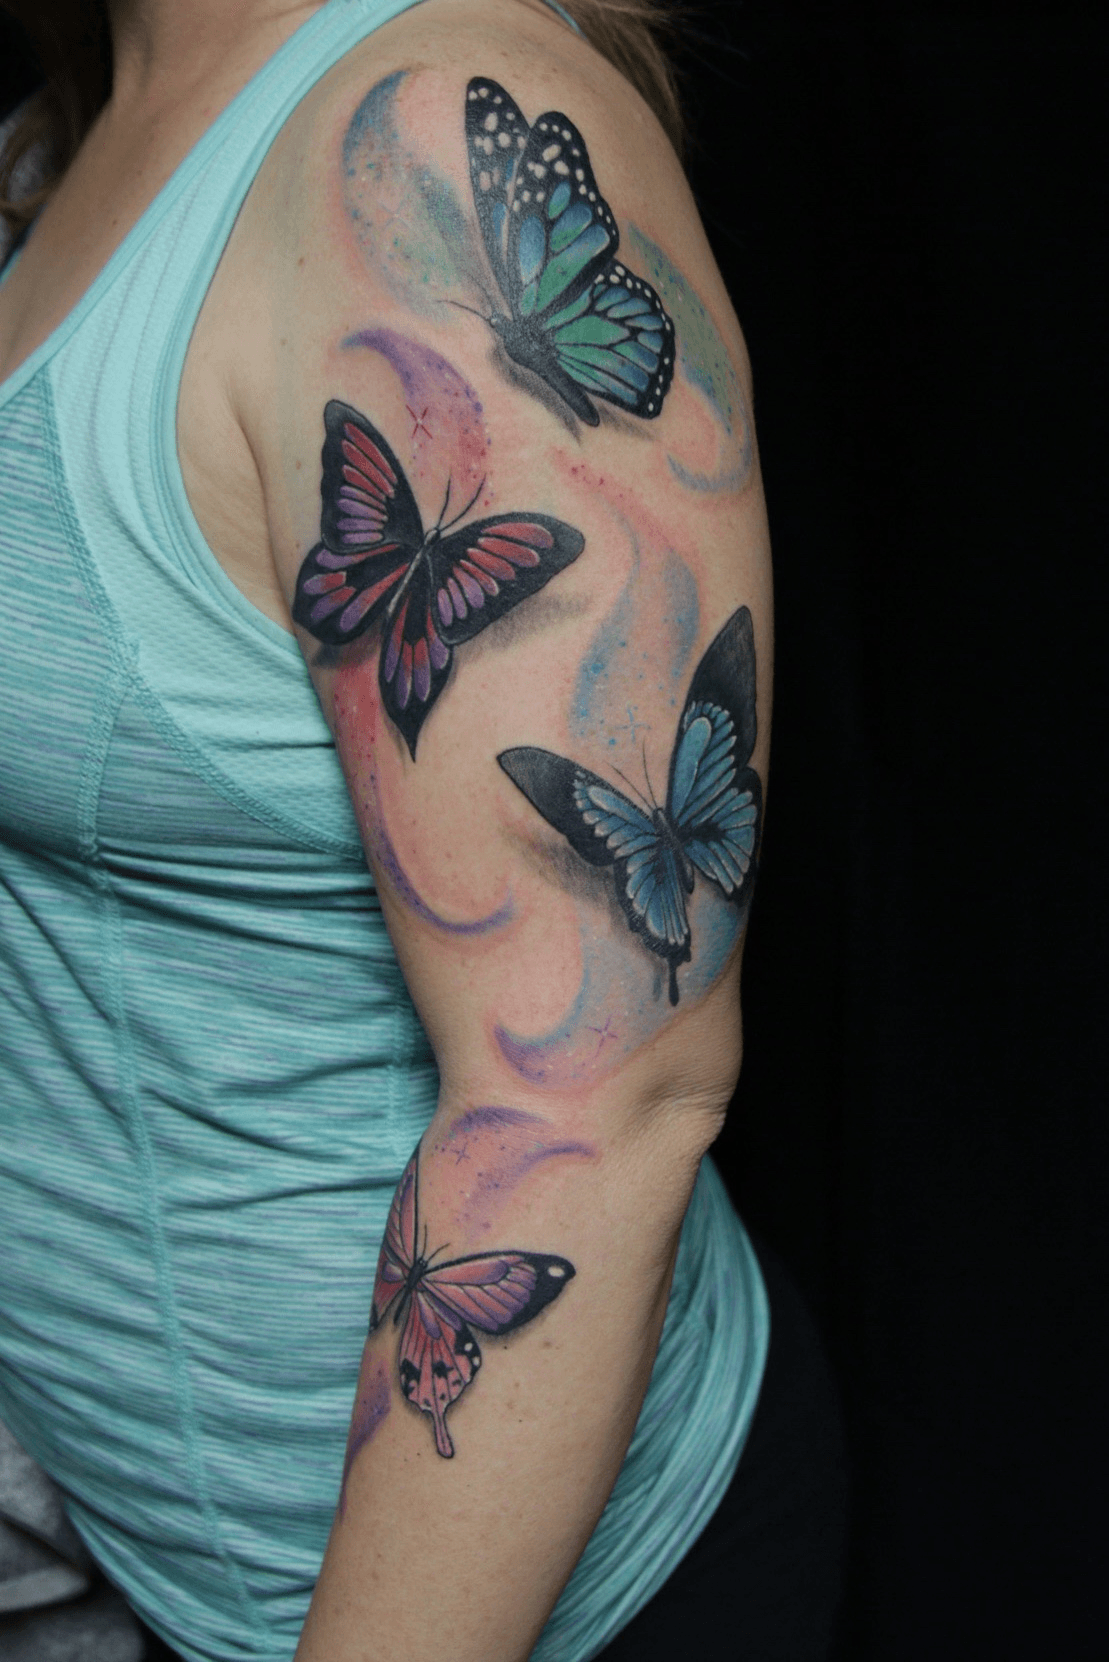 My almost healed Angel Dust Tattoo done by the incredibly talented Joza    rHazbinHotel